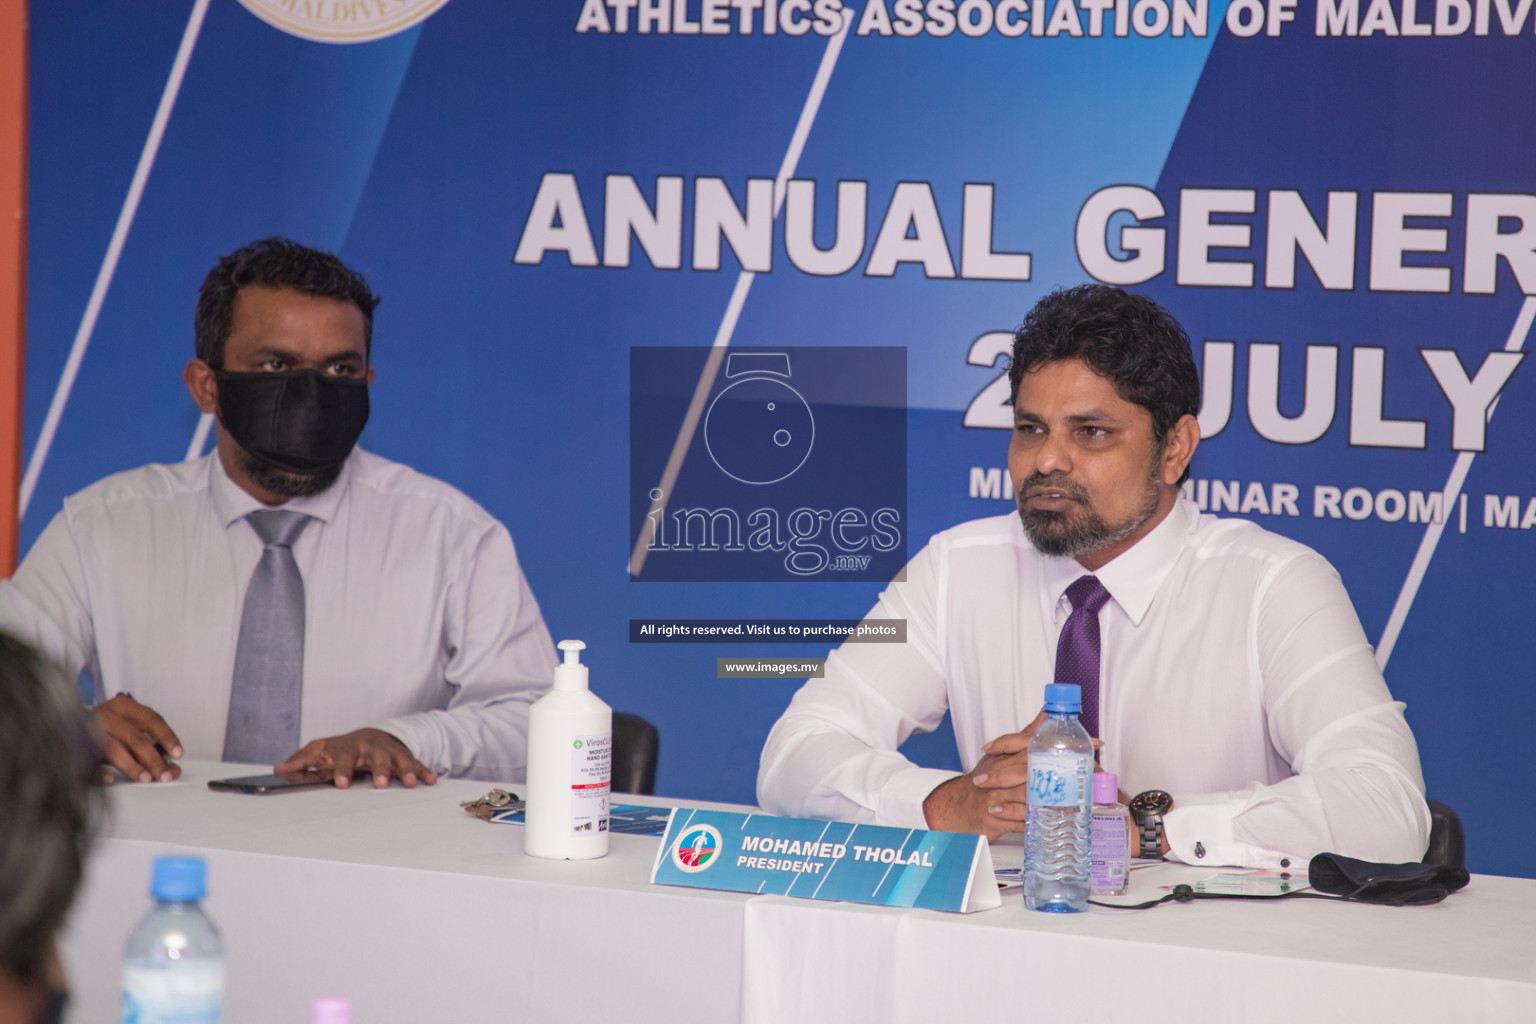 Annual General Meeting of Maldives Athletics (Athletics Association of Maldives) on 29 July 2020 held in Male', Maldives